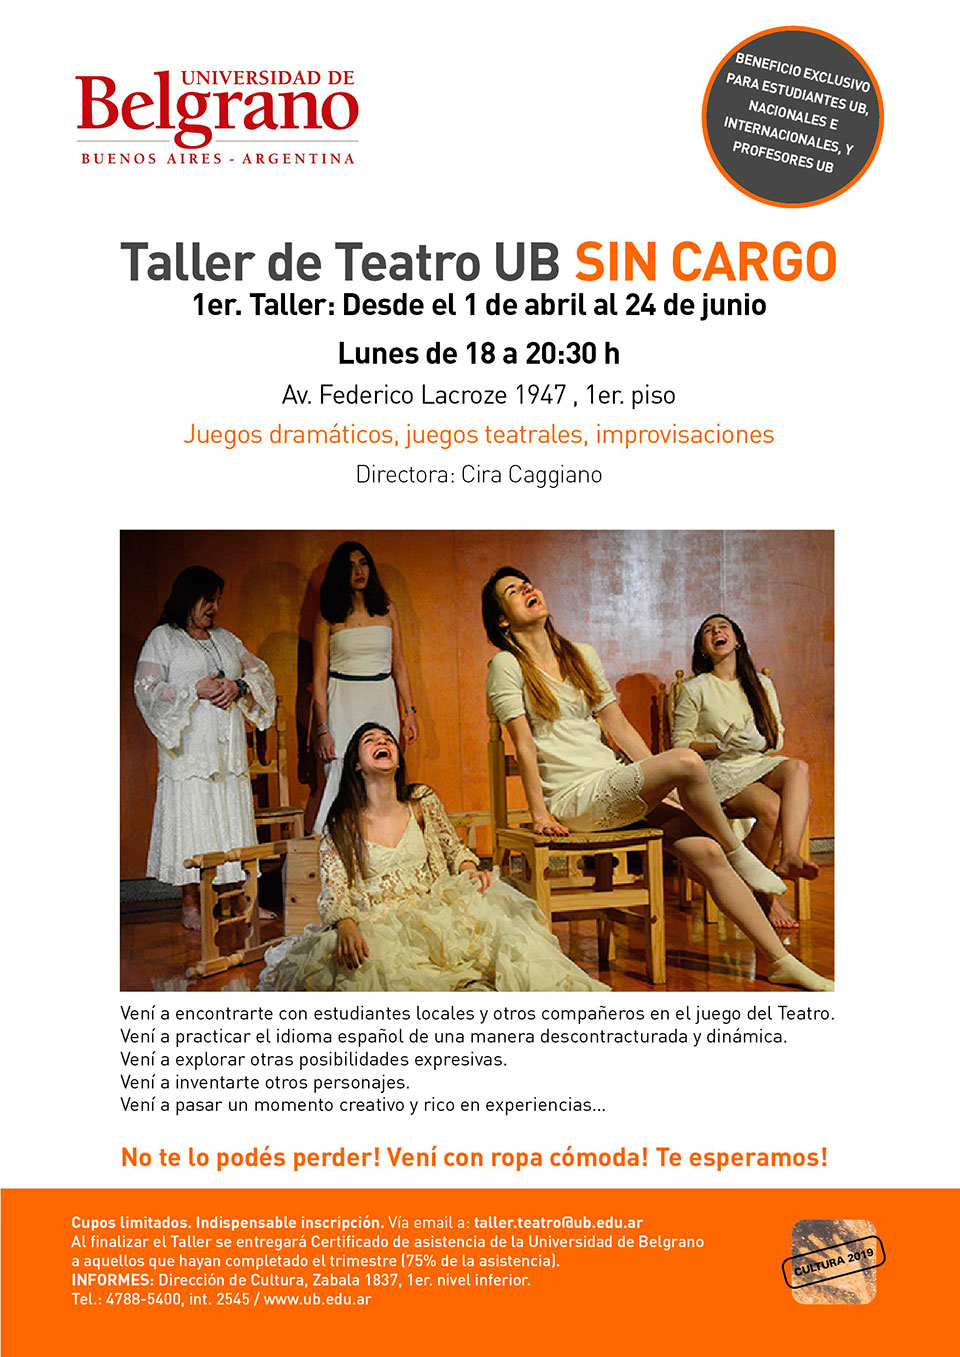 Taller de Teatro UB Sin Cargo